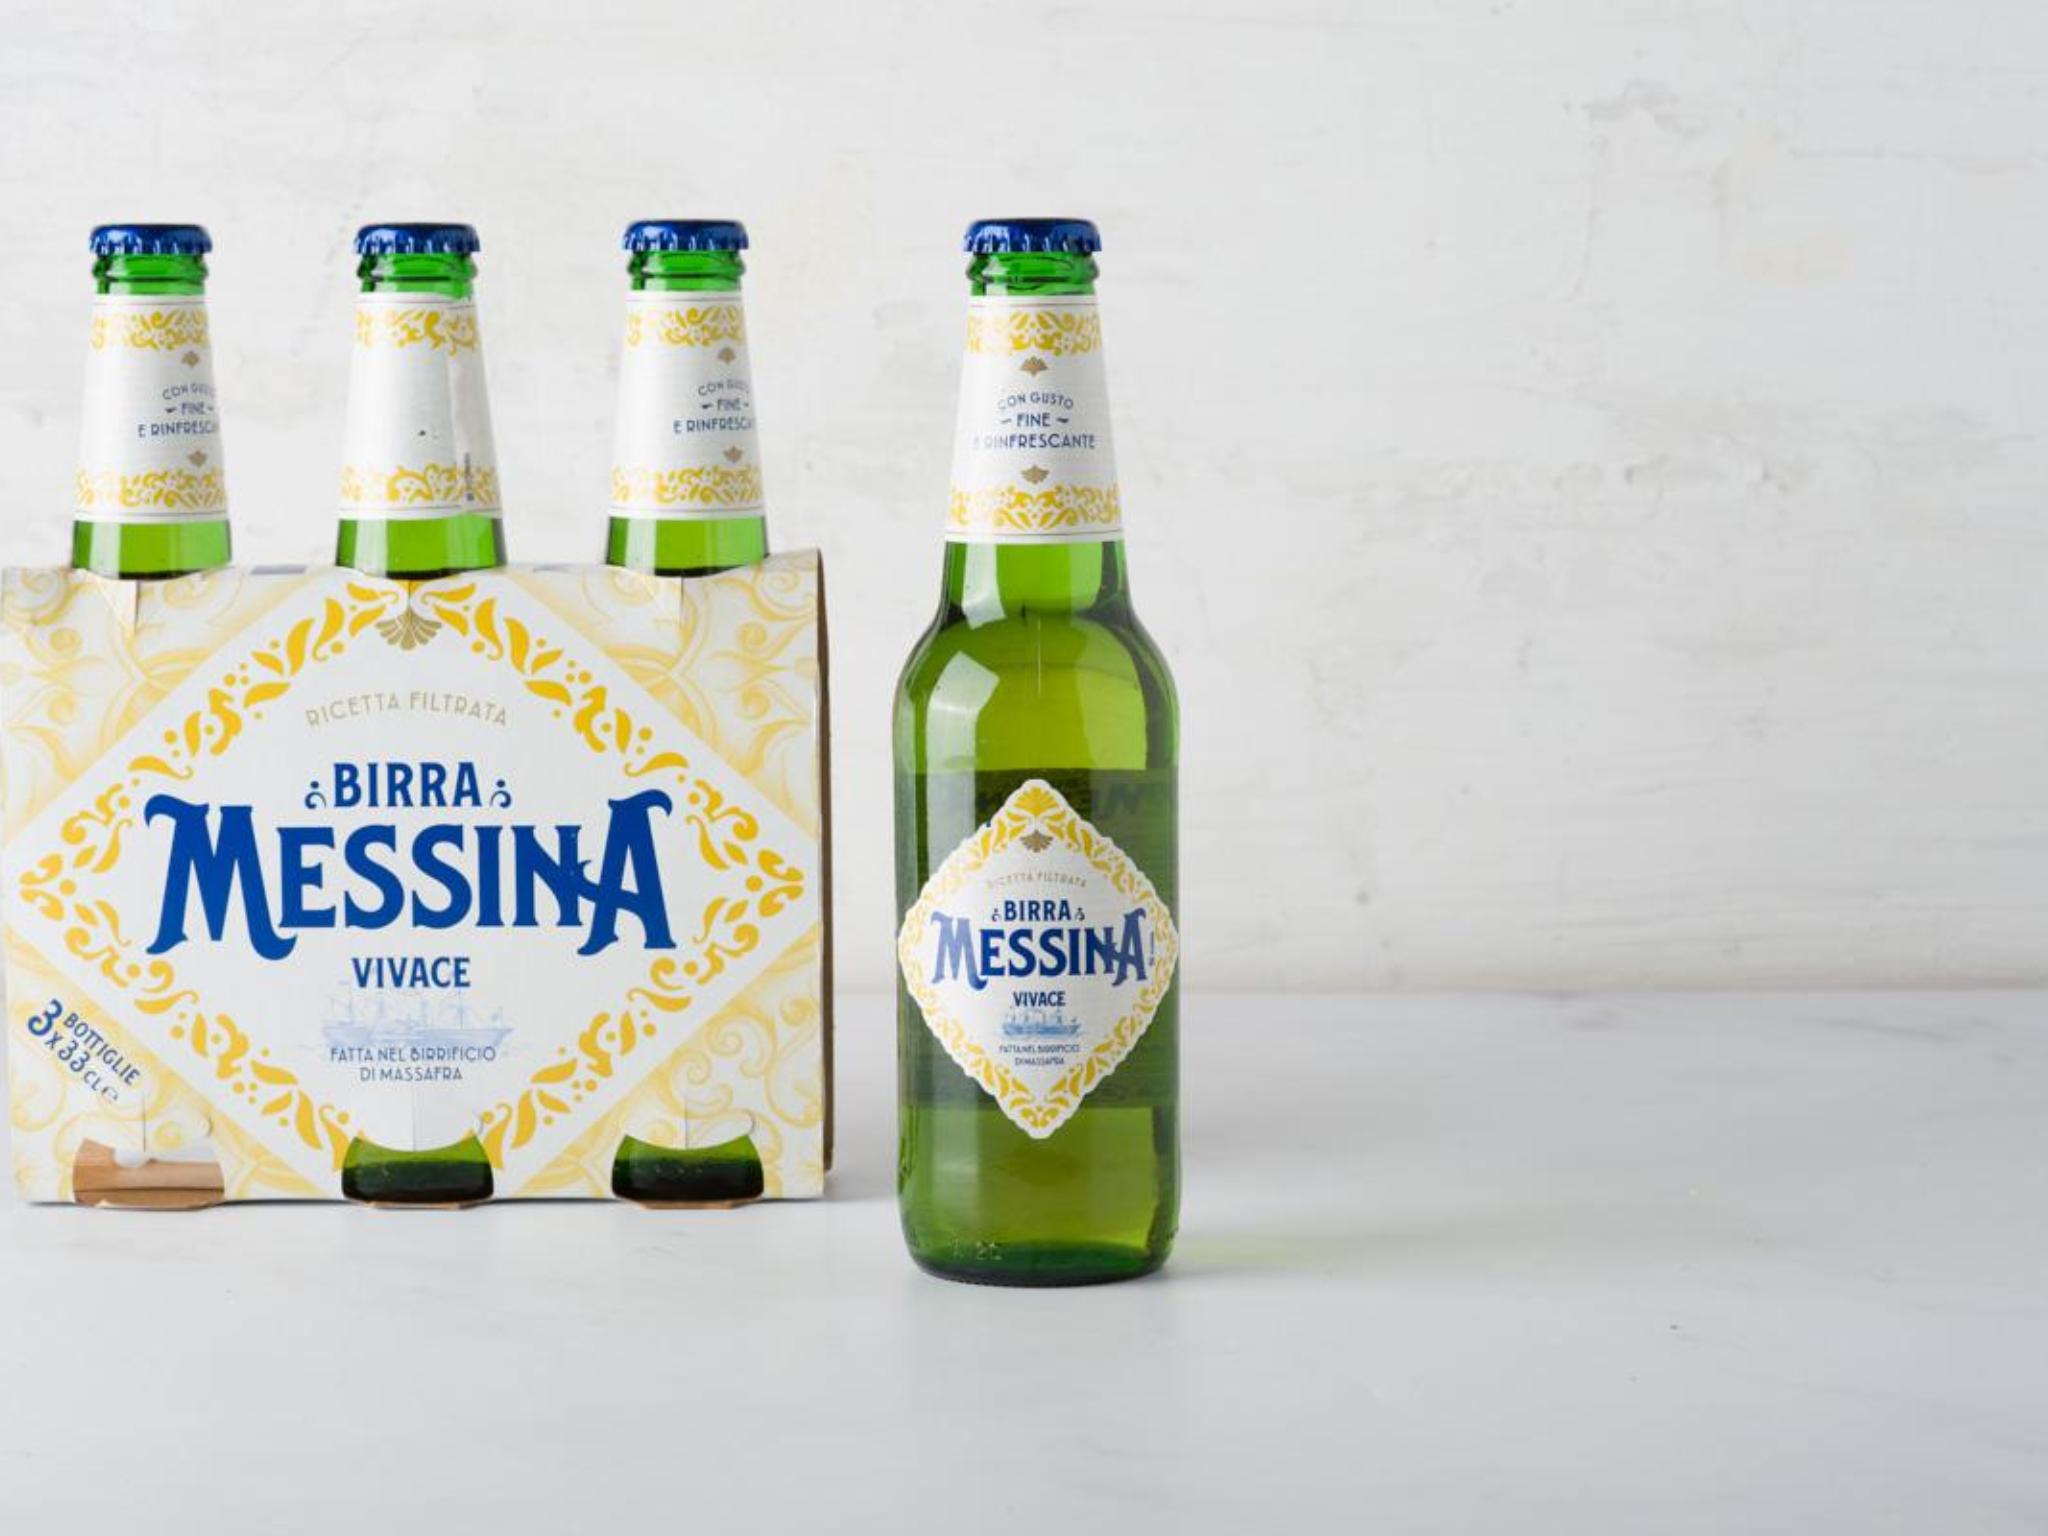 Birra Messina vivace